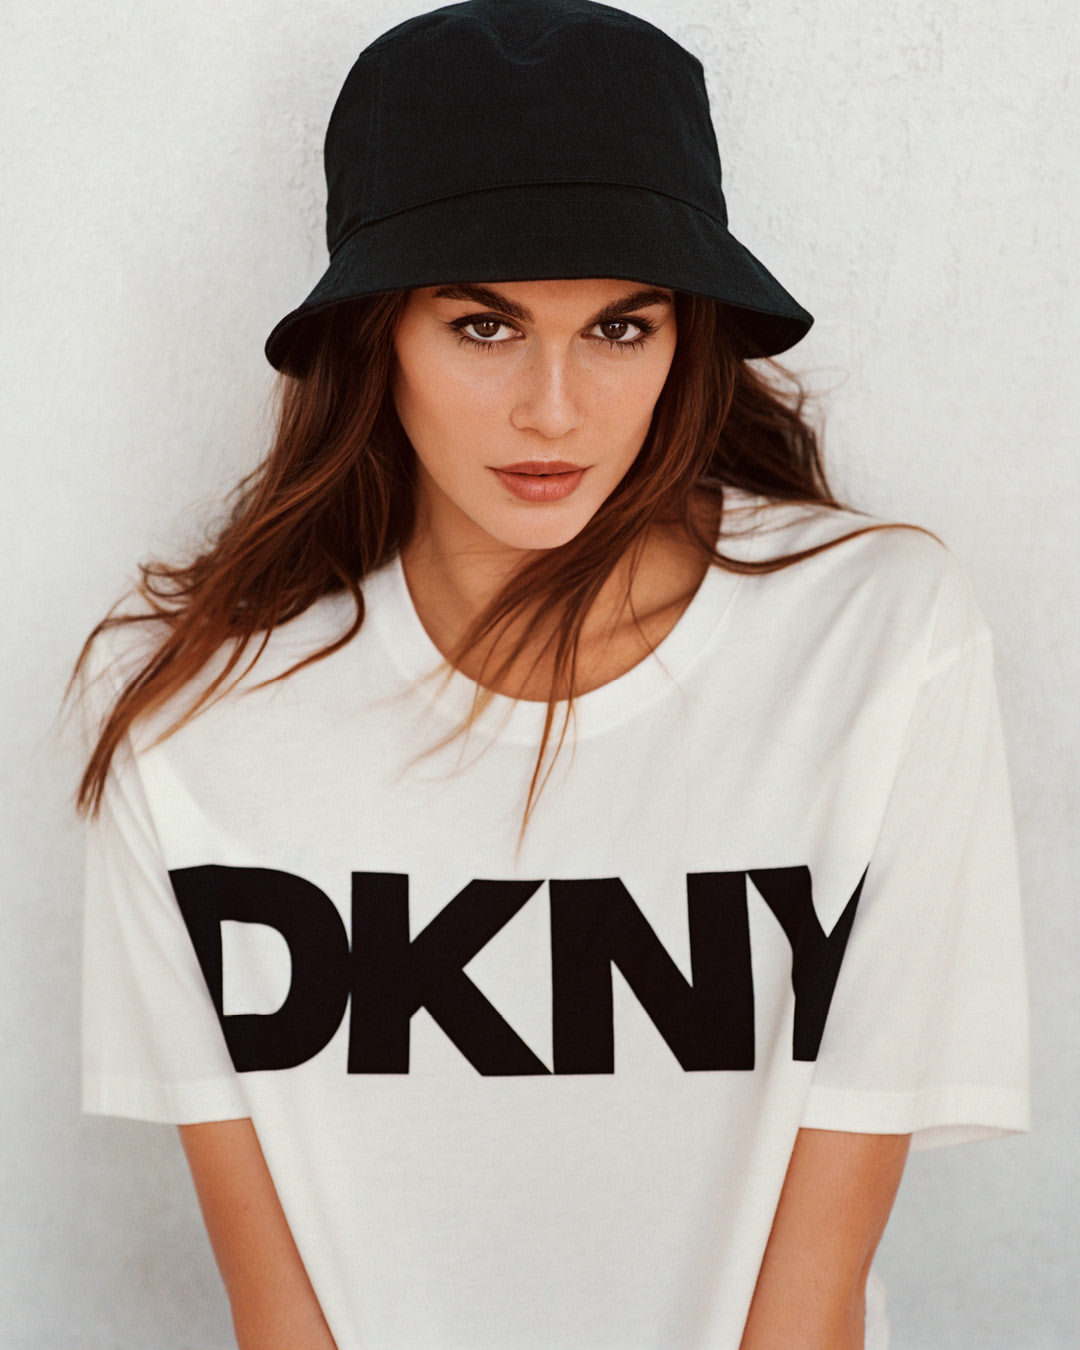 Кайя Гербер - нове обличчя марки DKNY